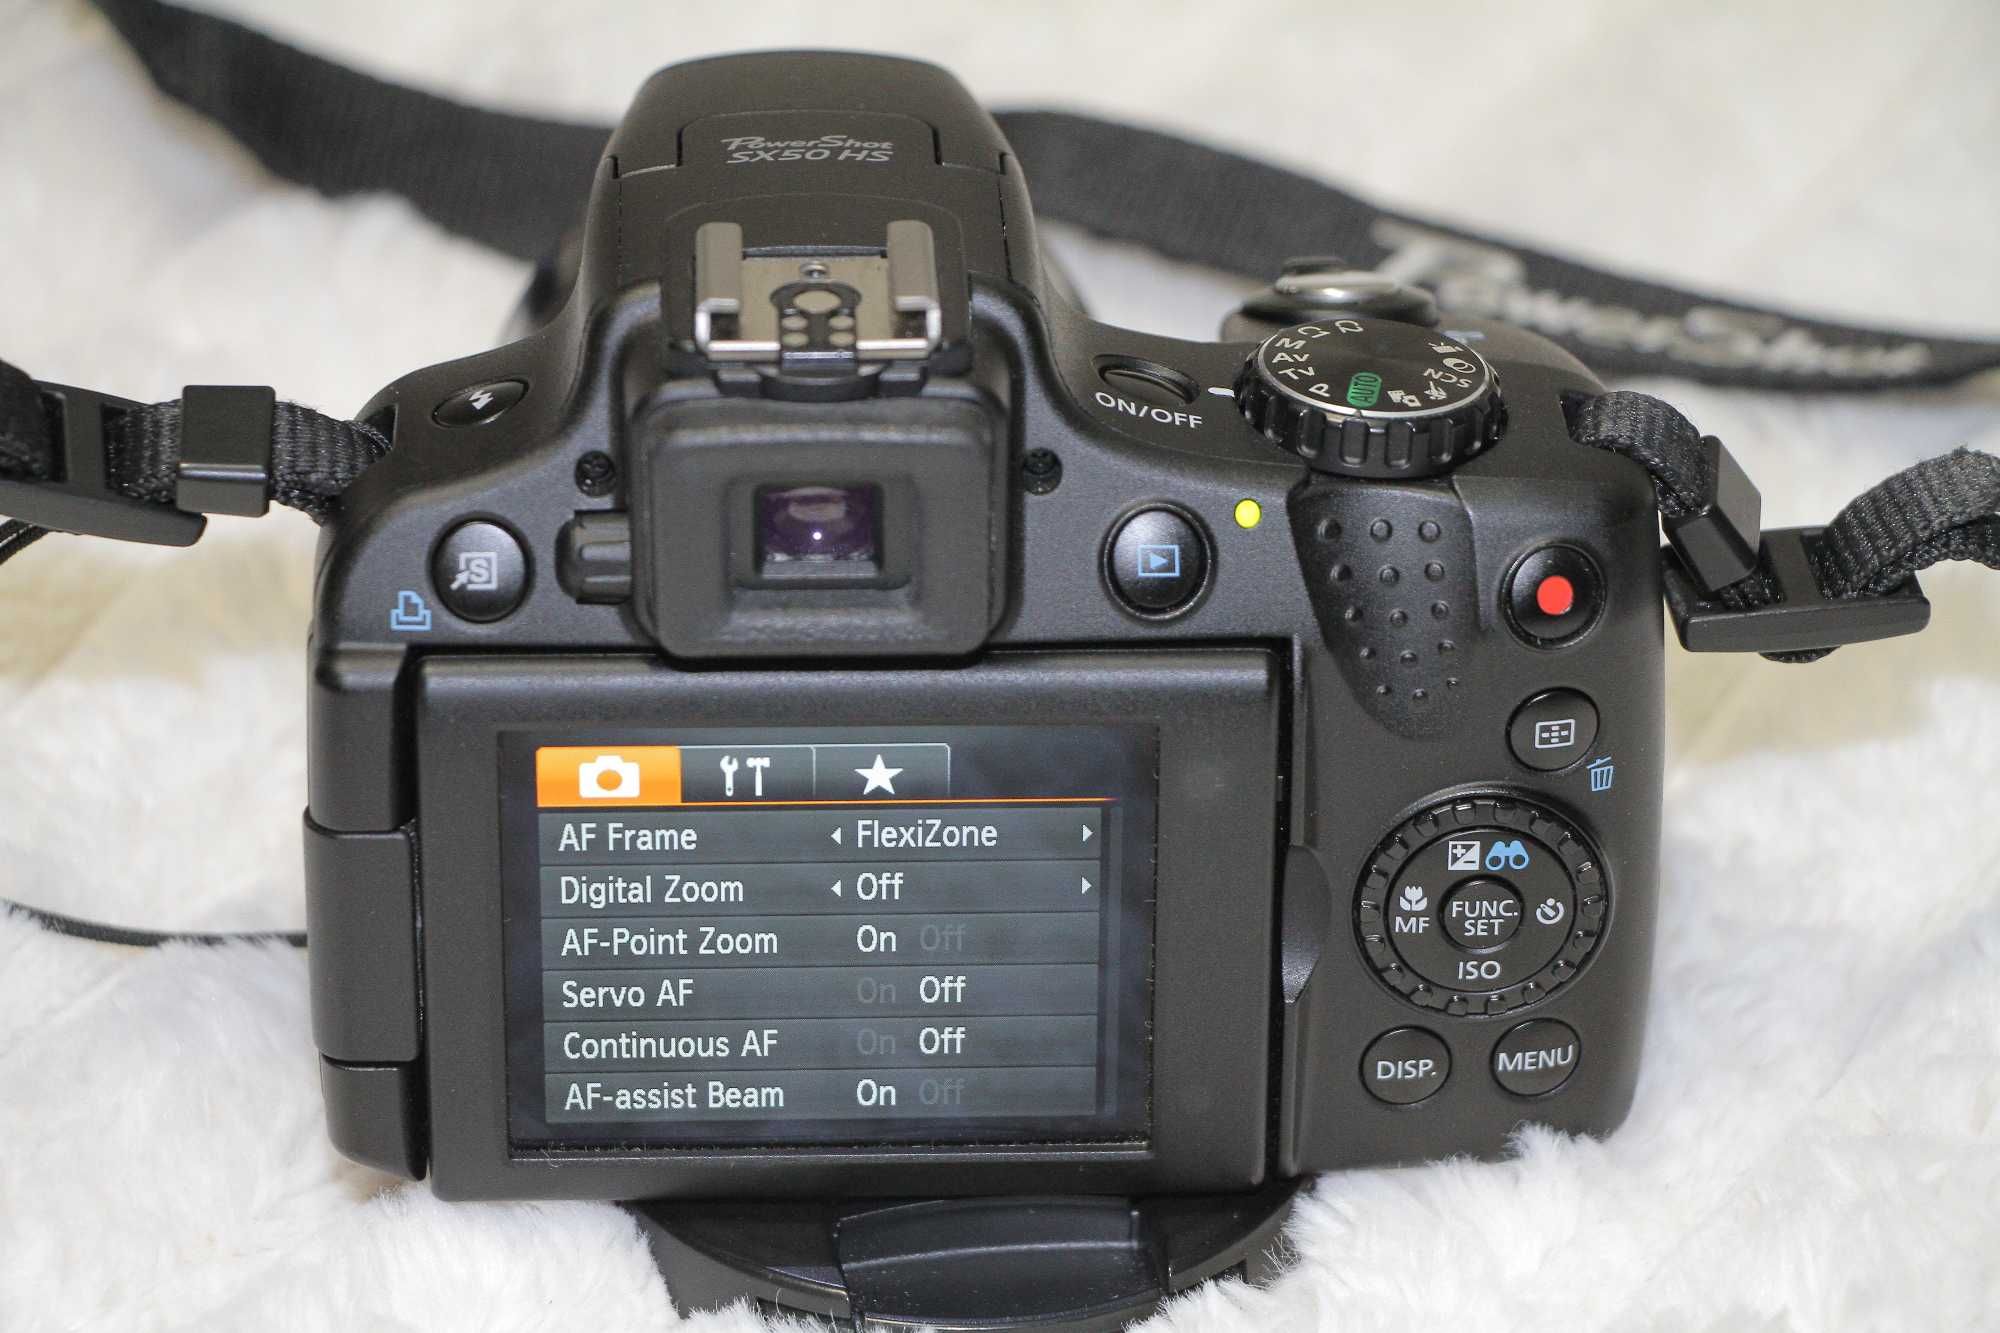 Canon PowerShoot SX50 HS